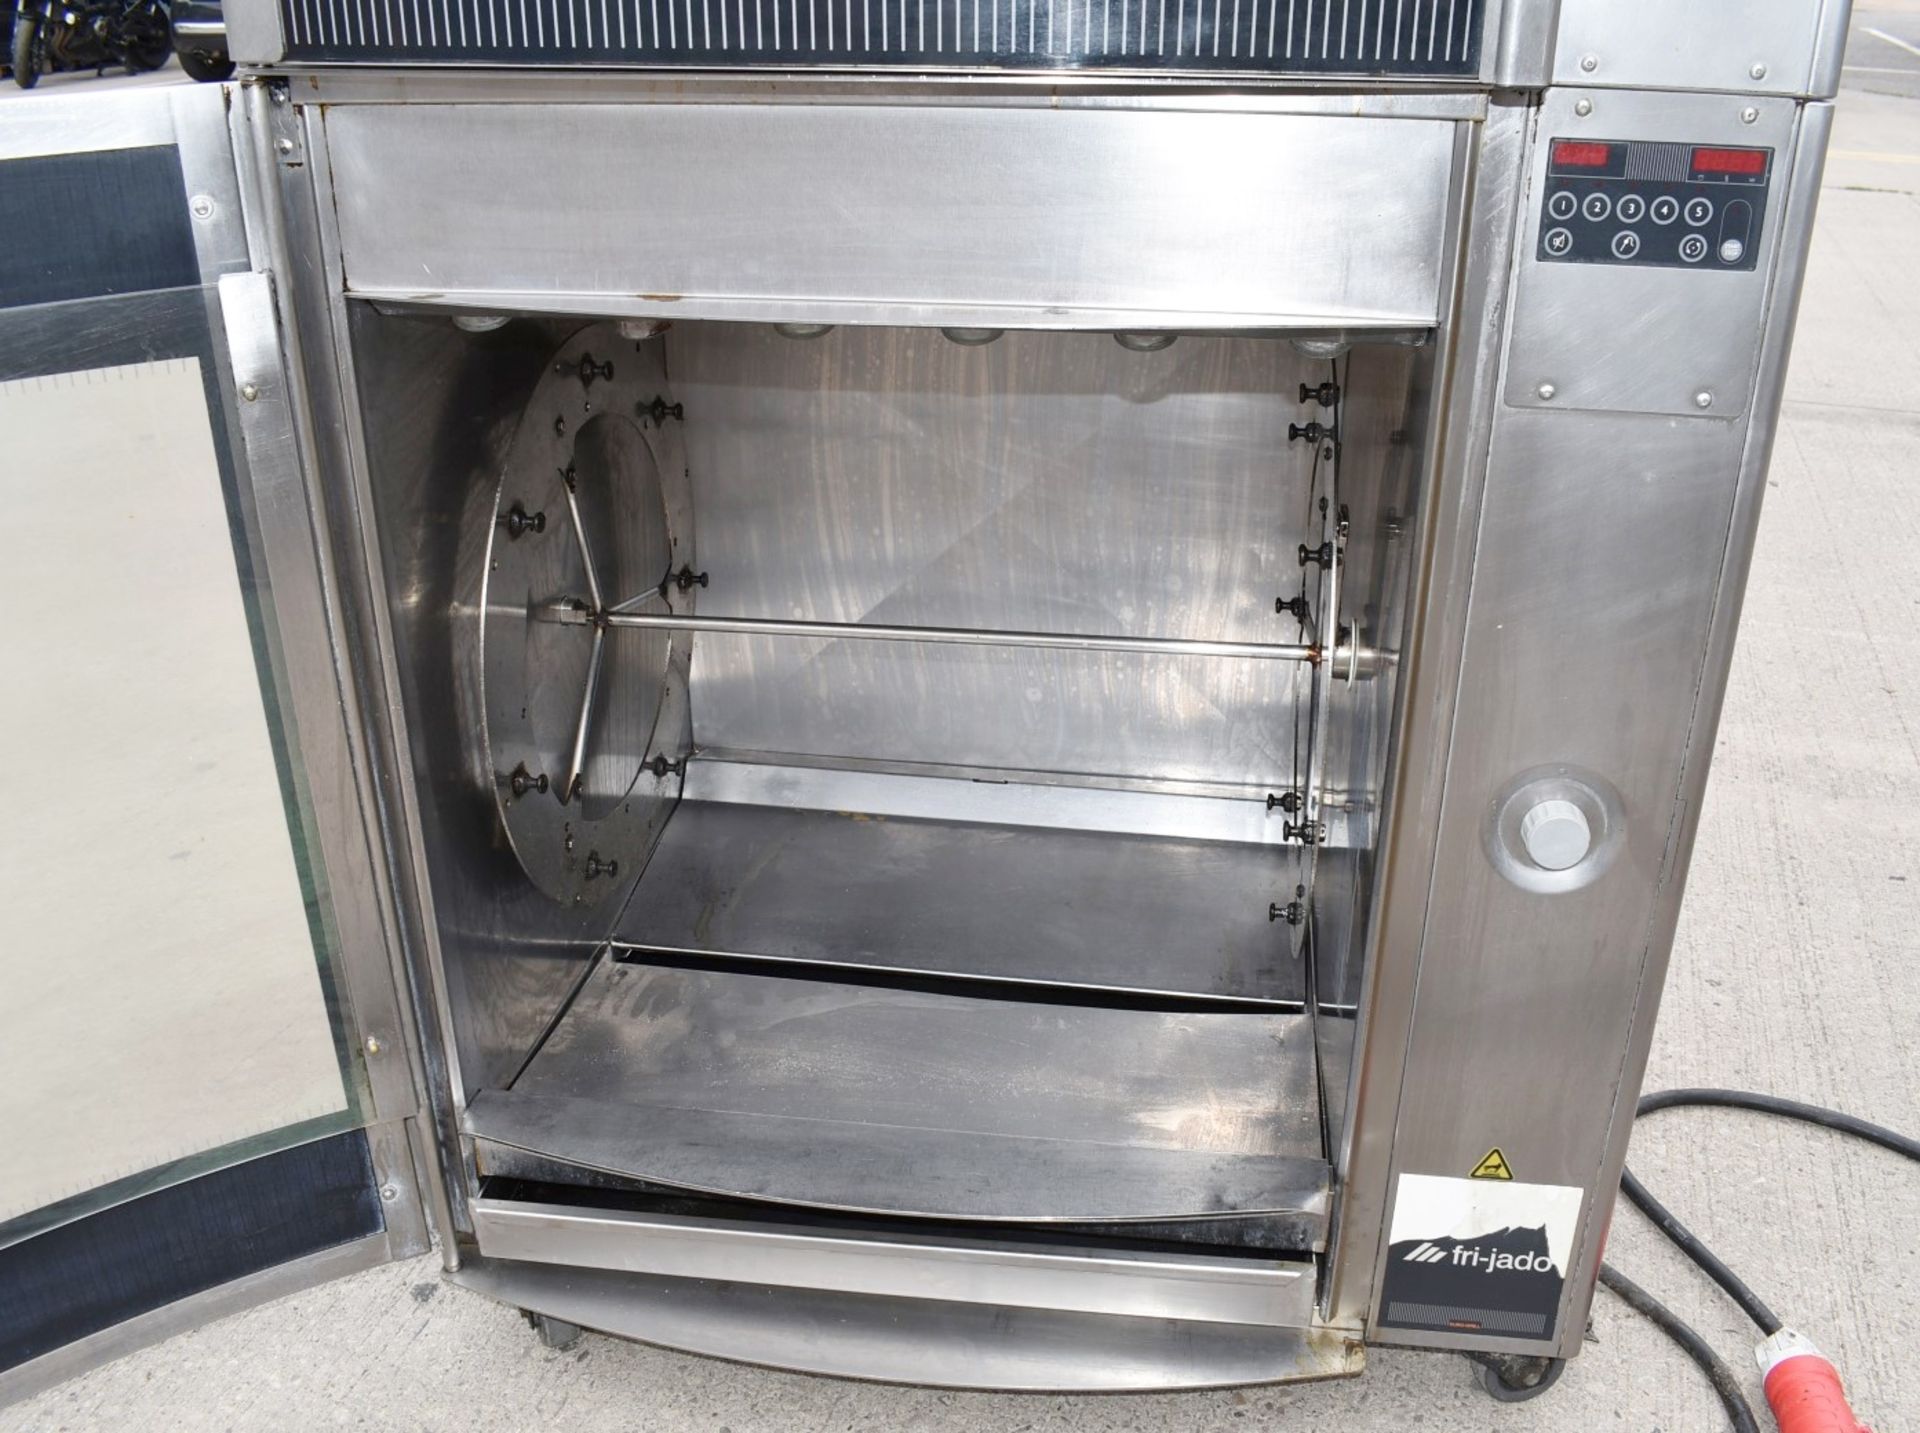 1 x Fri-Jado Rotisserie Chicken Double Oven - 3 Phase Power - Ref: JON231 - CL232 - Location: - Image 3 of 16